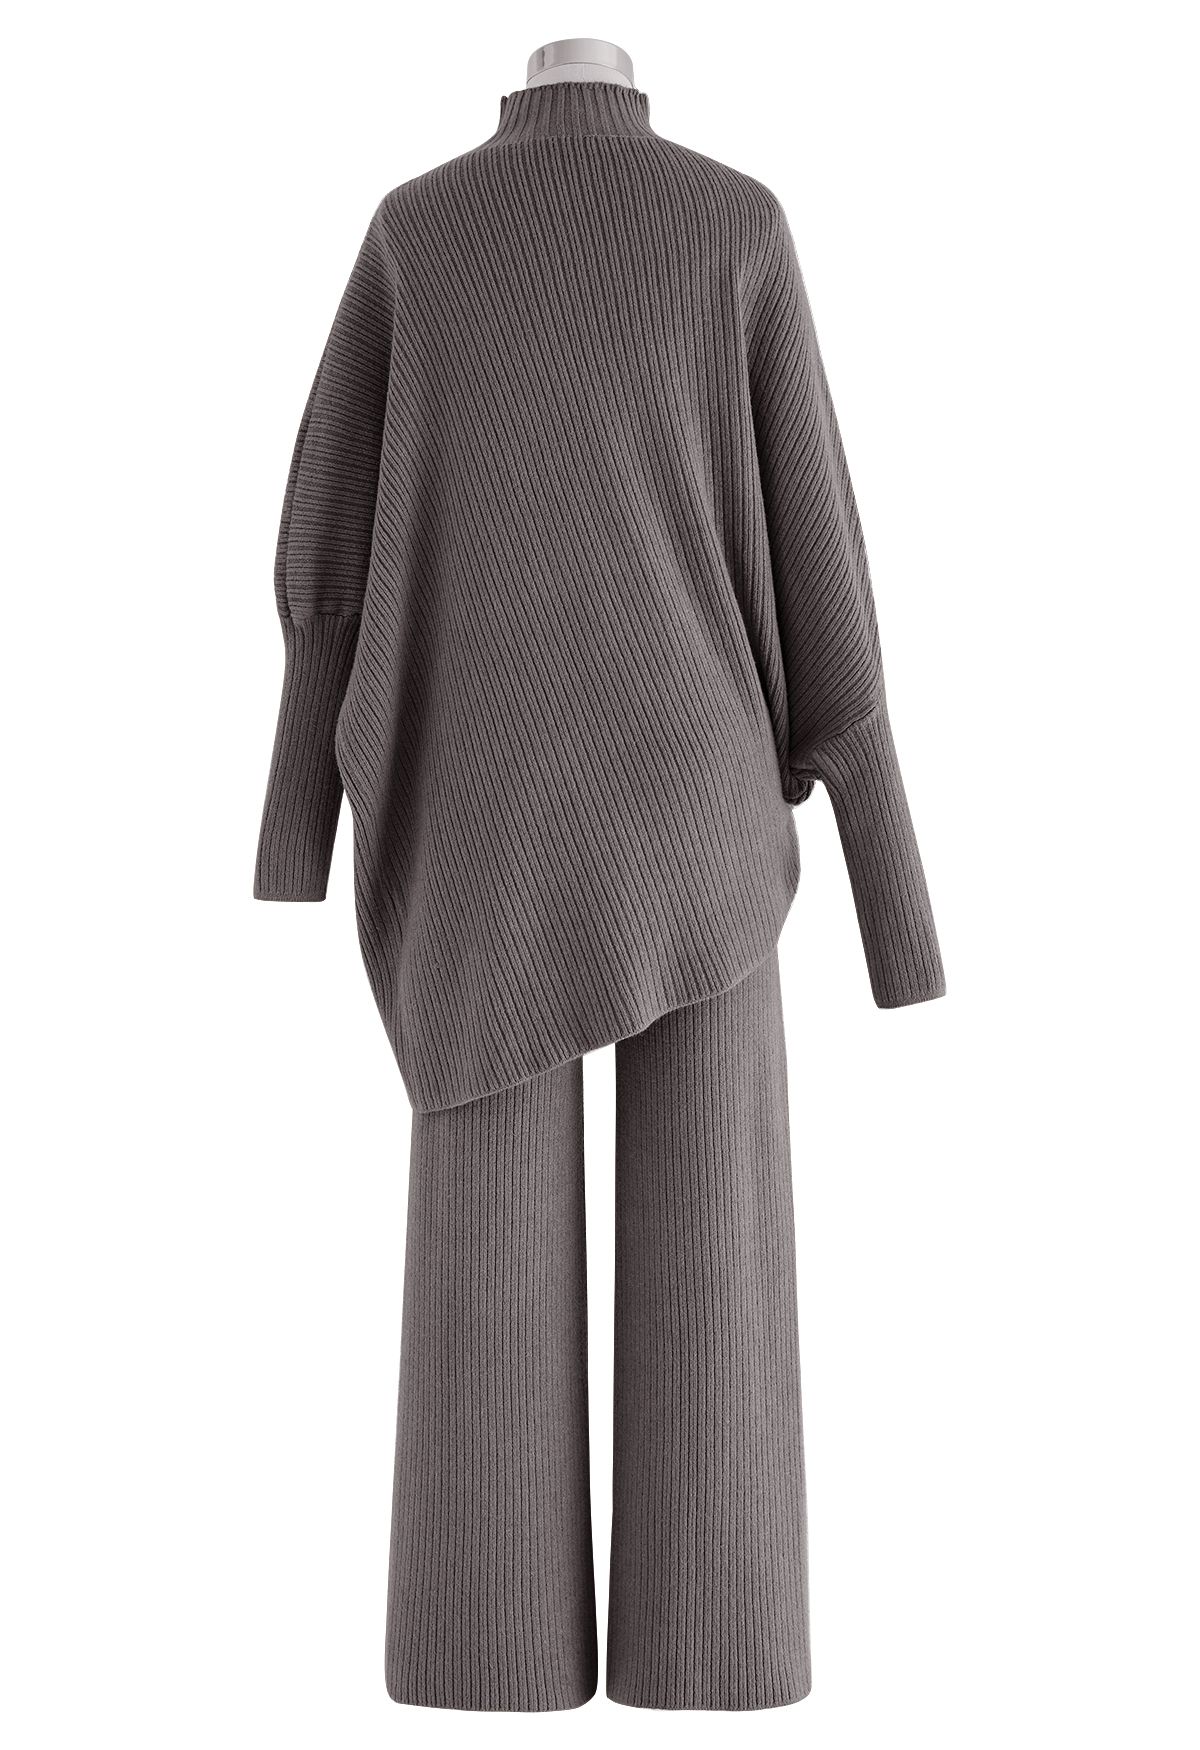 Conjunto de suéter y pantalón asimétrico con manga de murciélago en gris